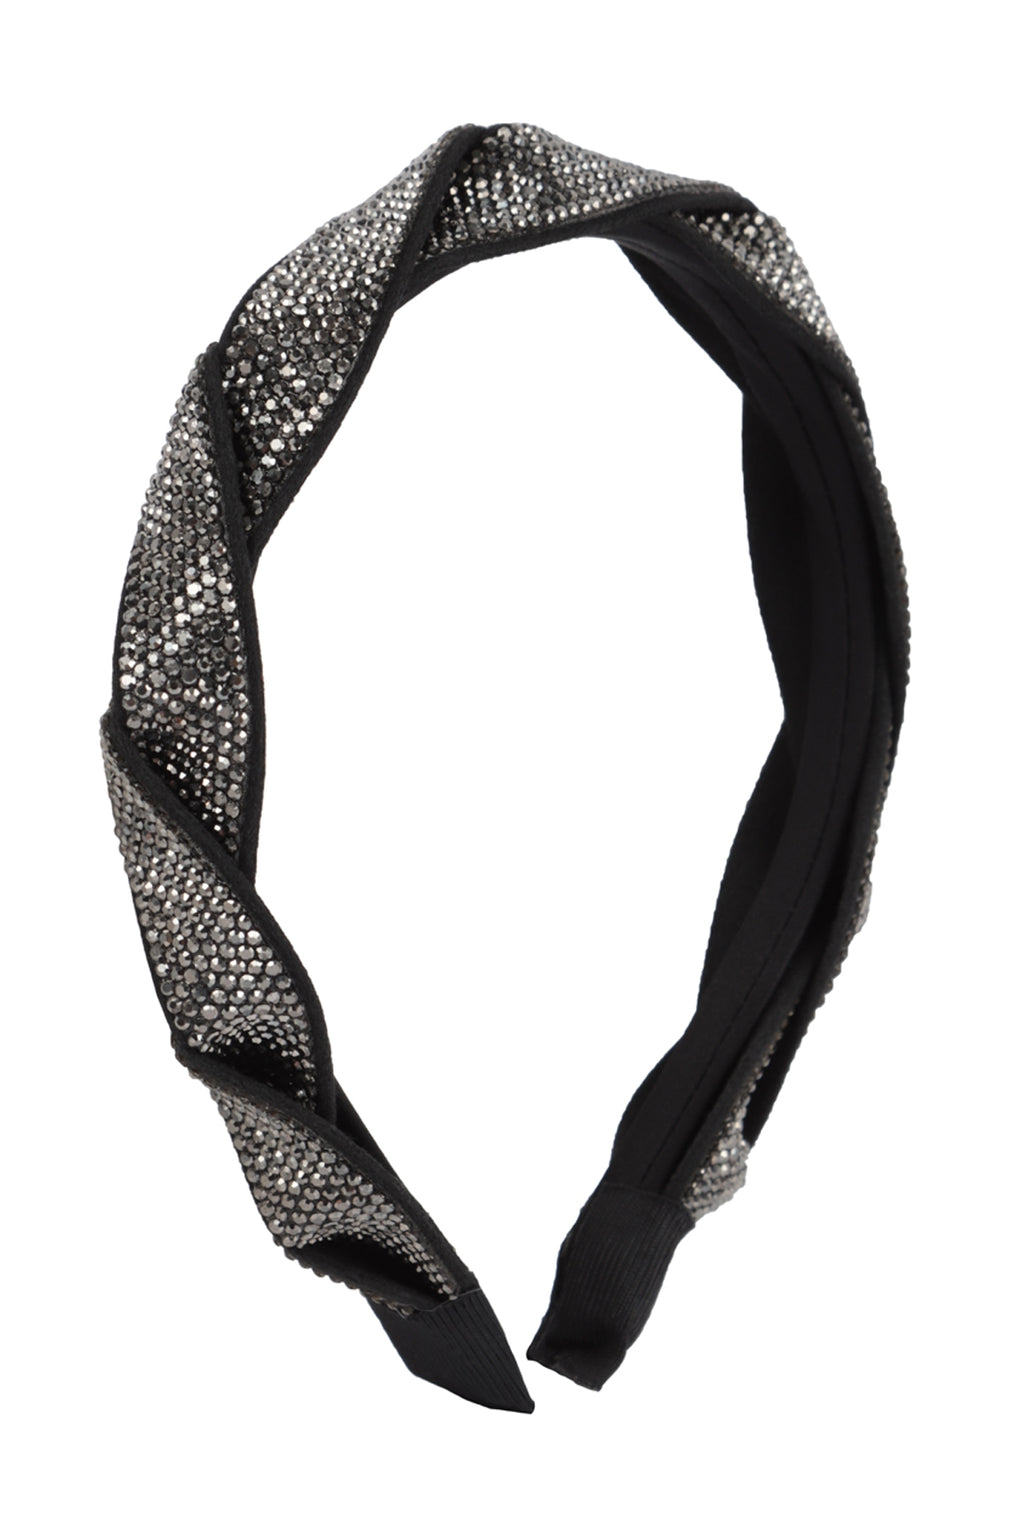 Shiny Rhinestone Braided Headband Black - Pack of 6